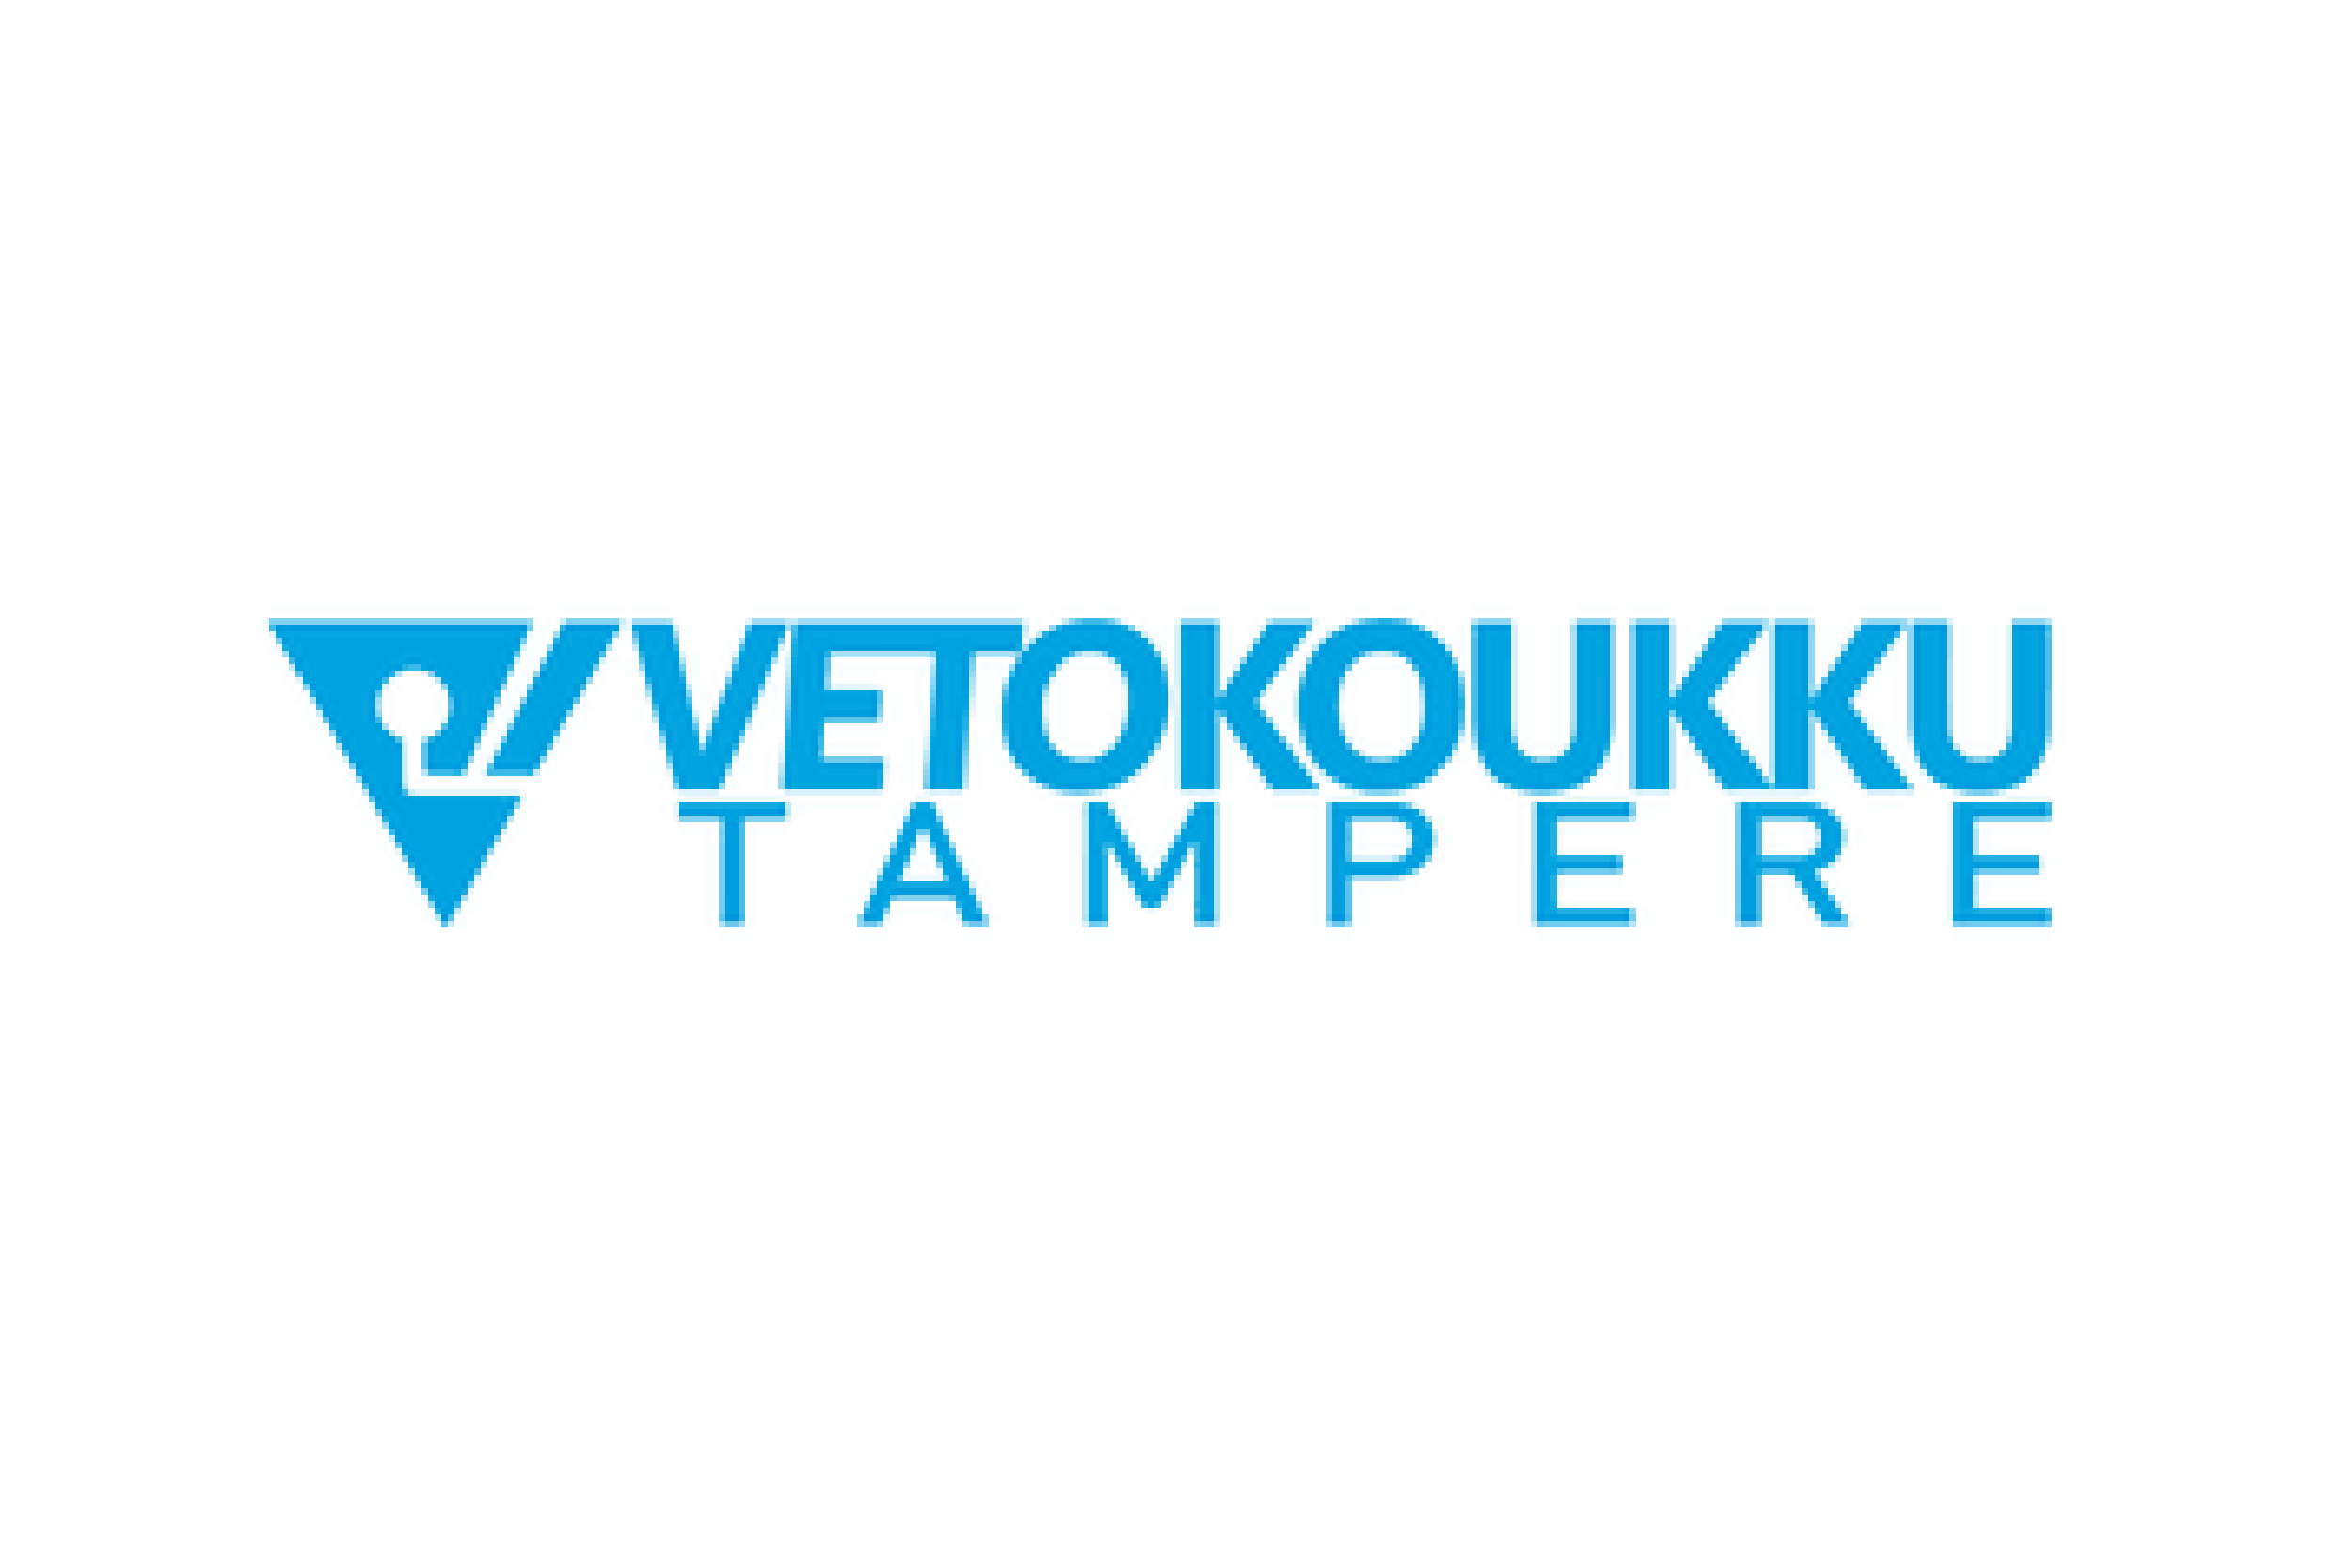 Ilves-Verkosto -  Vetokoukku Tampere Oy